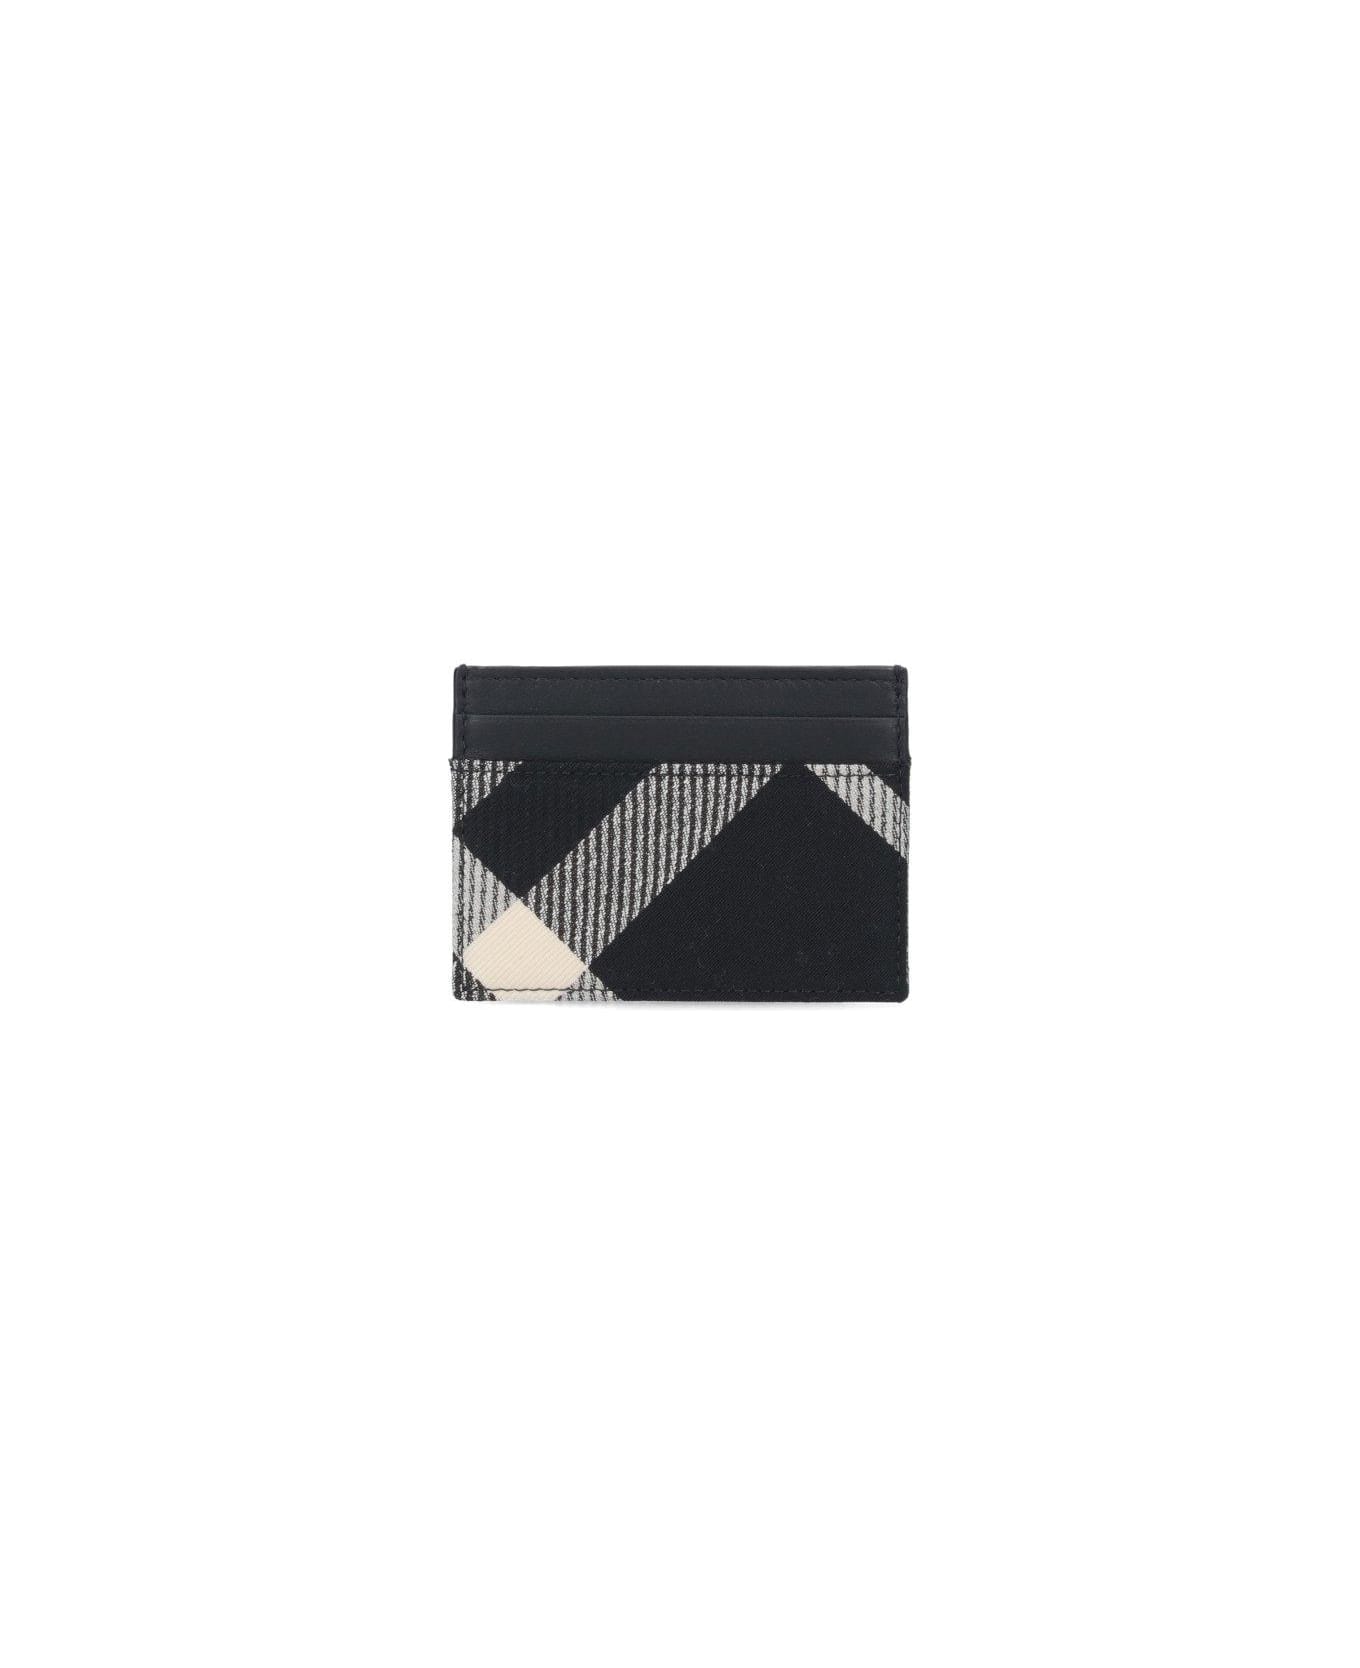 Burberry Checked Cardholder - Black calico 財布